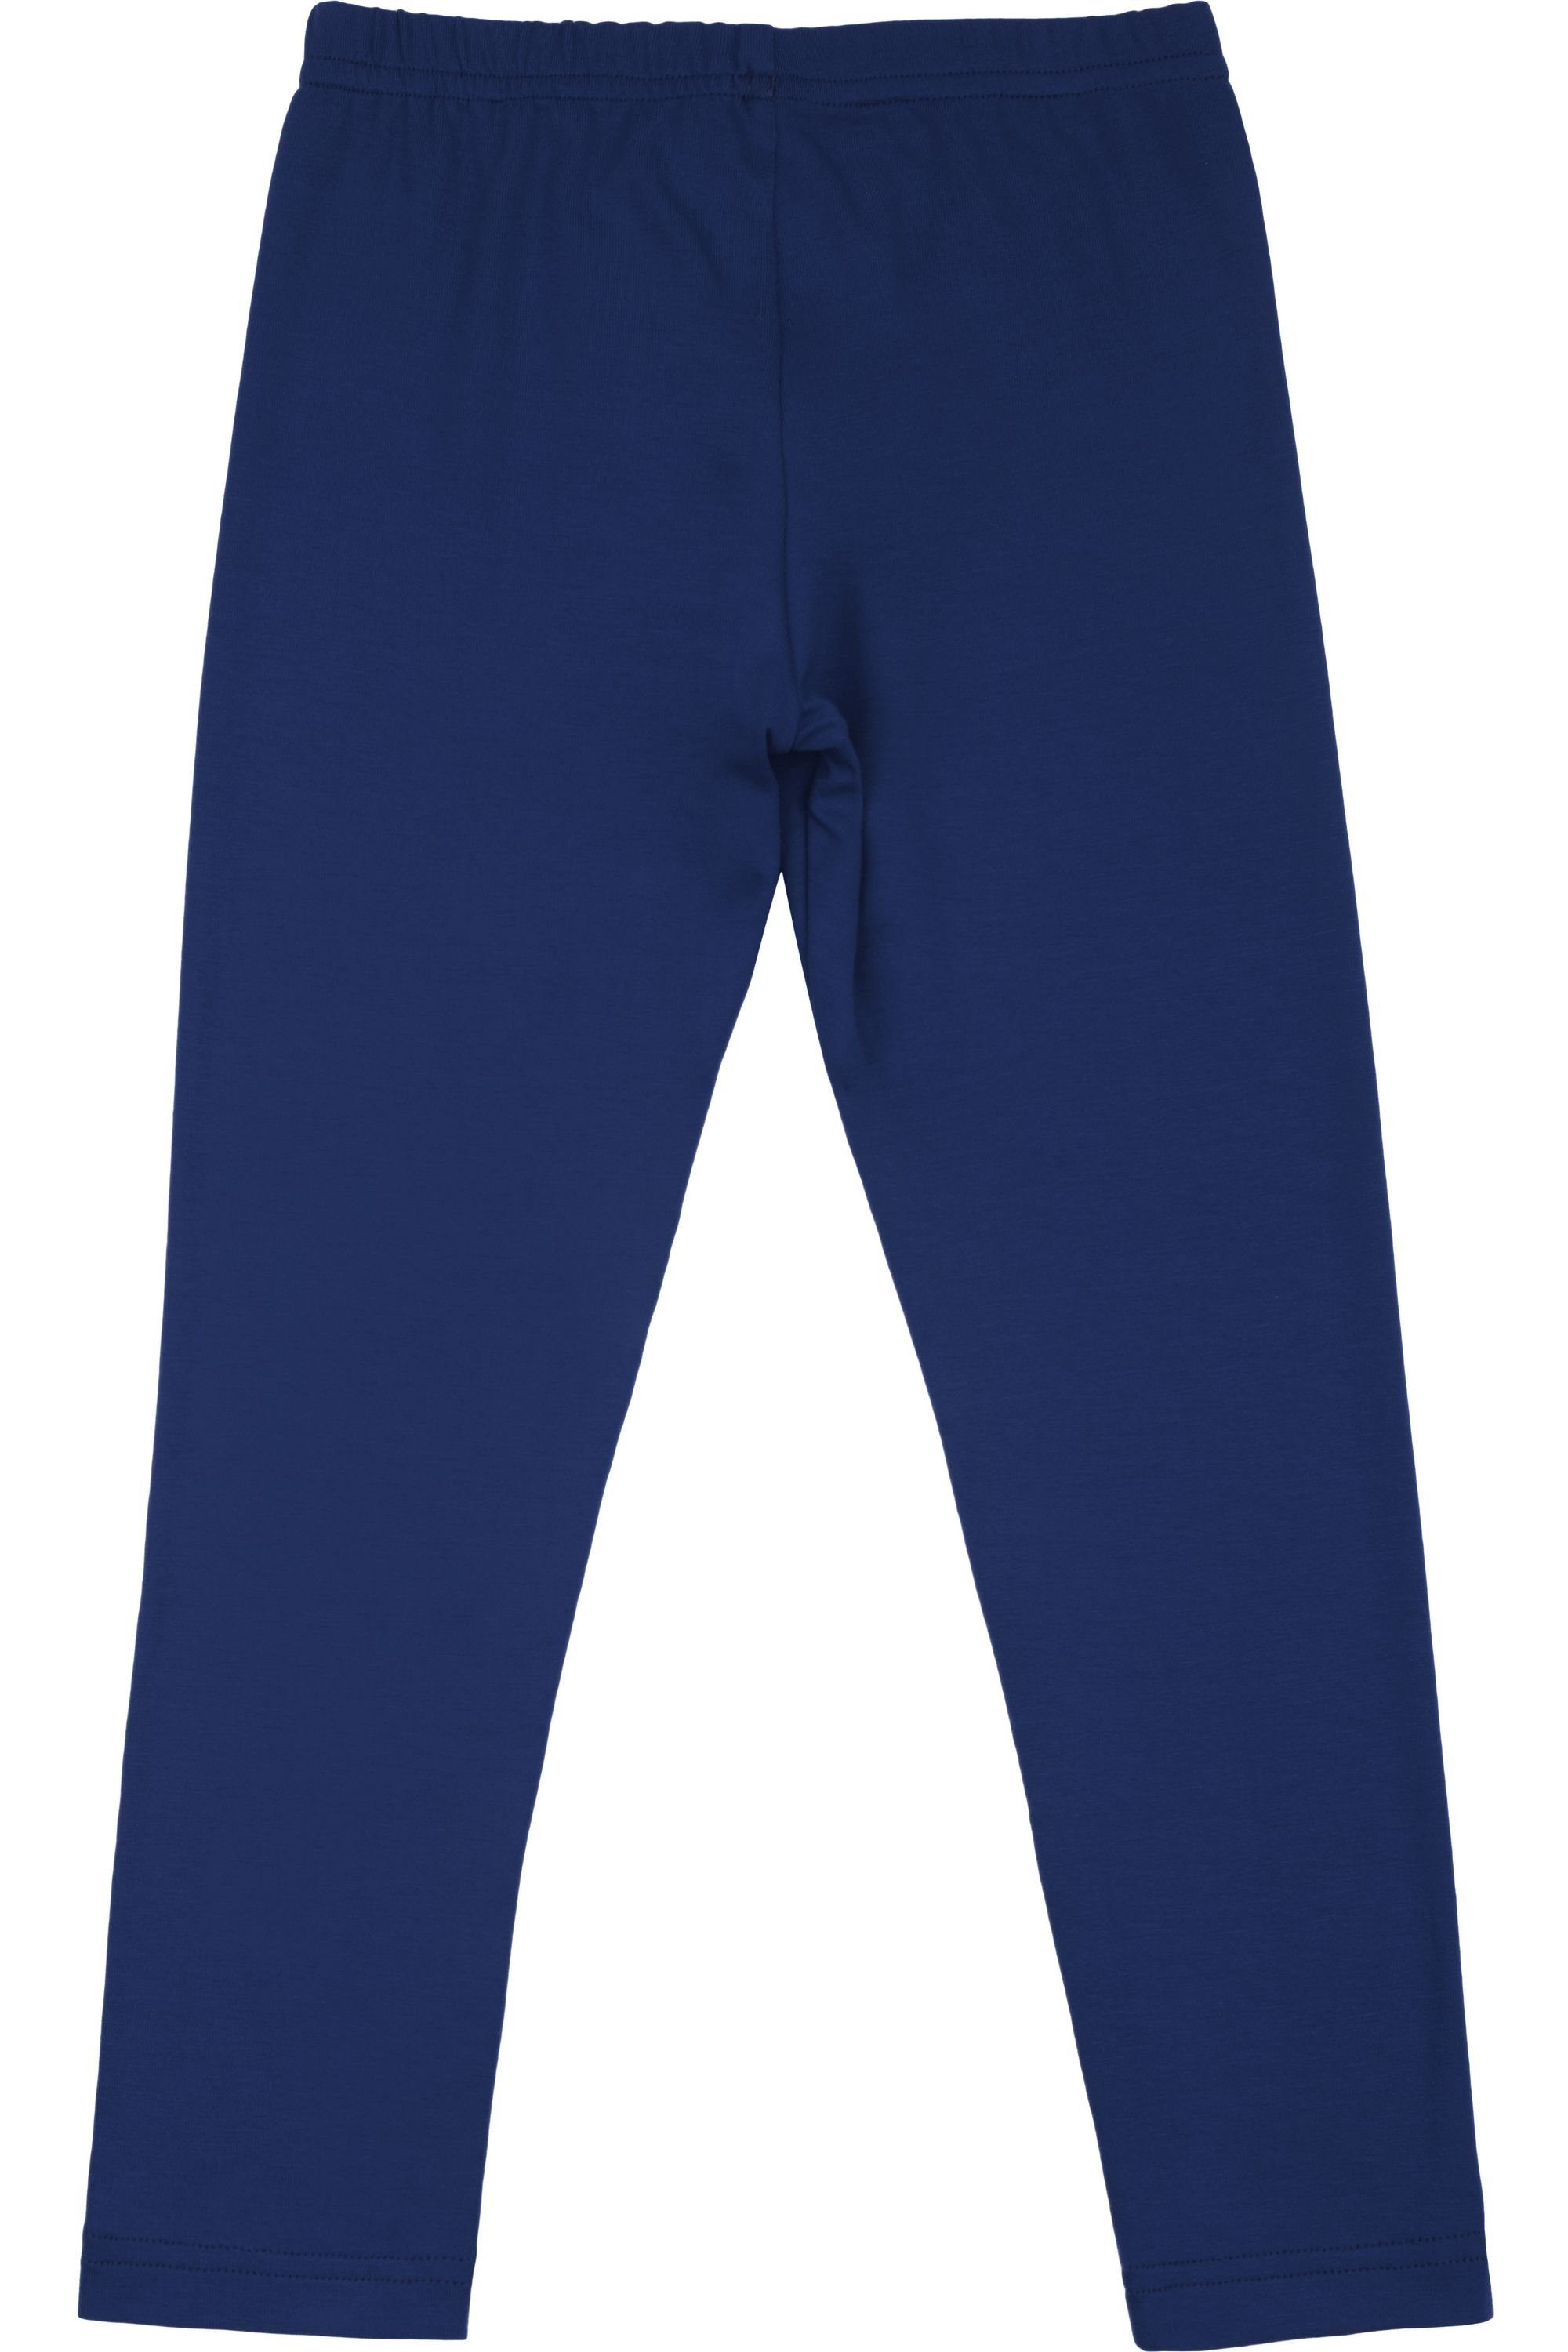 Lange Viskose MS10-130 Marineblau (1-tlg) aus Merry Bund Mädchen elastischer Leggings Style Leggings